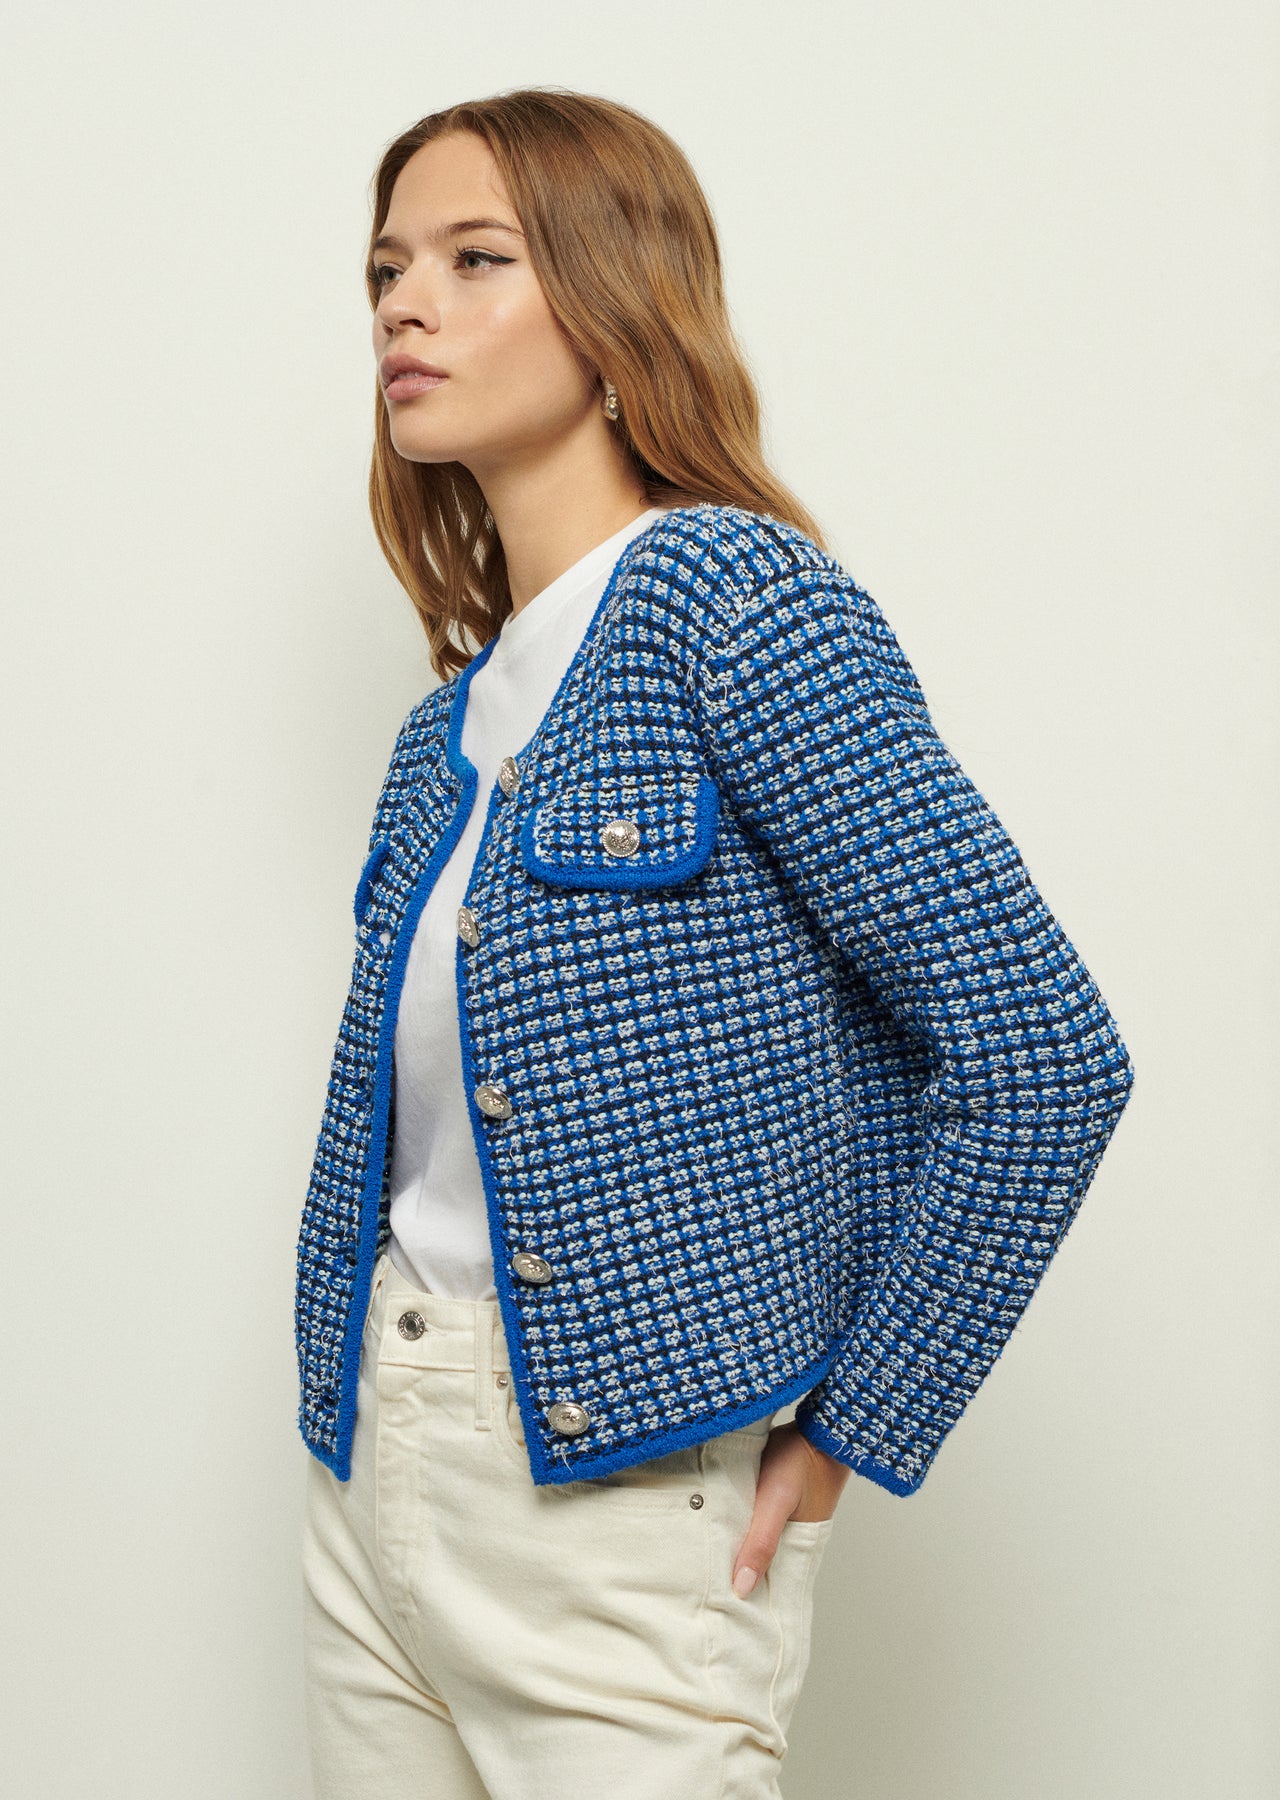 Women's Jackets & Coats | Derek Lam 10 Crosby